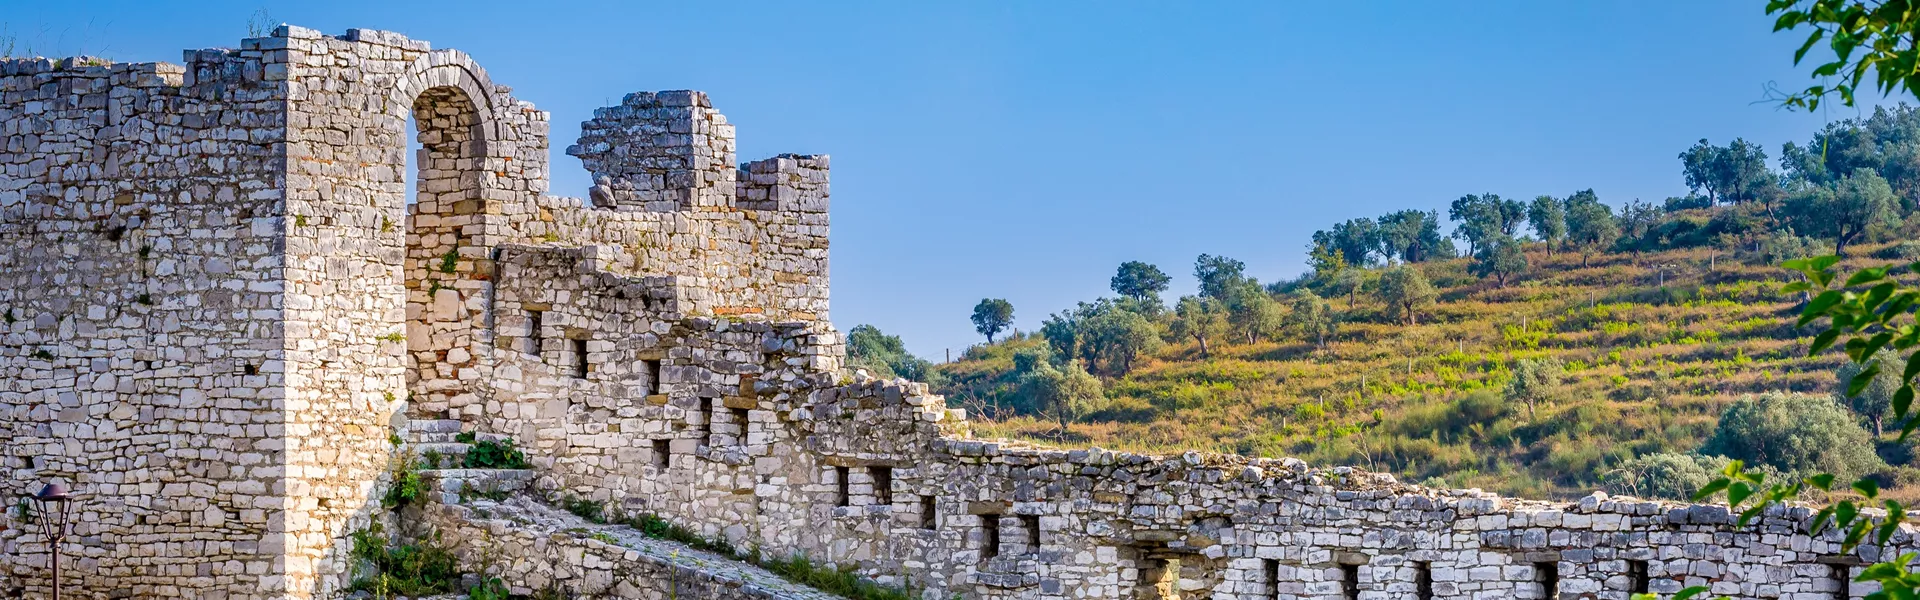 Fortress in Berat, Albania